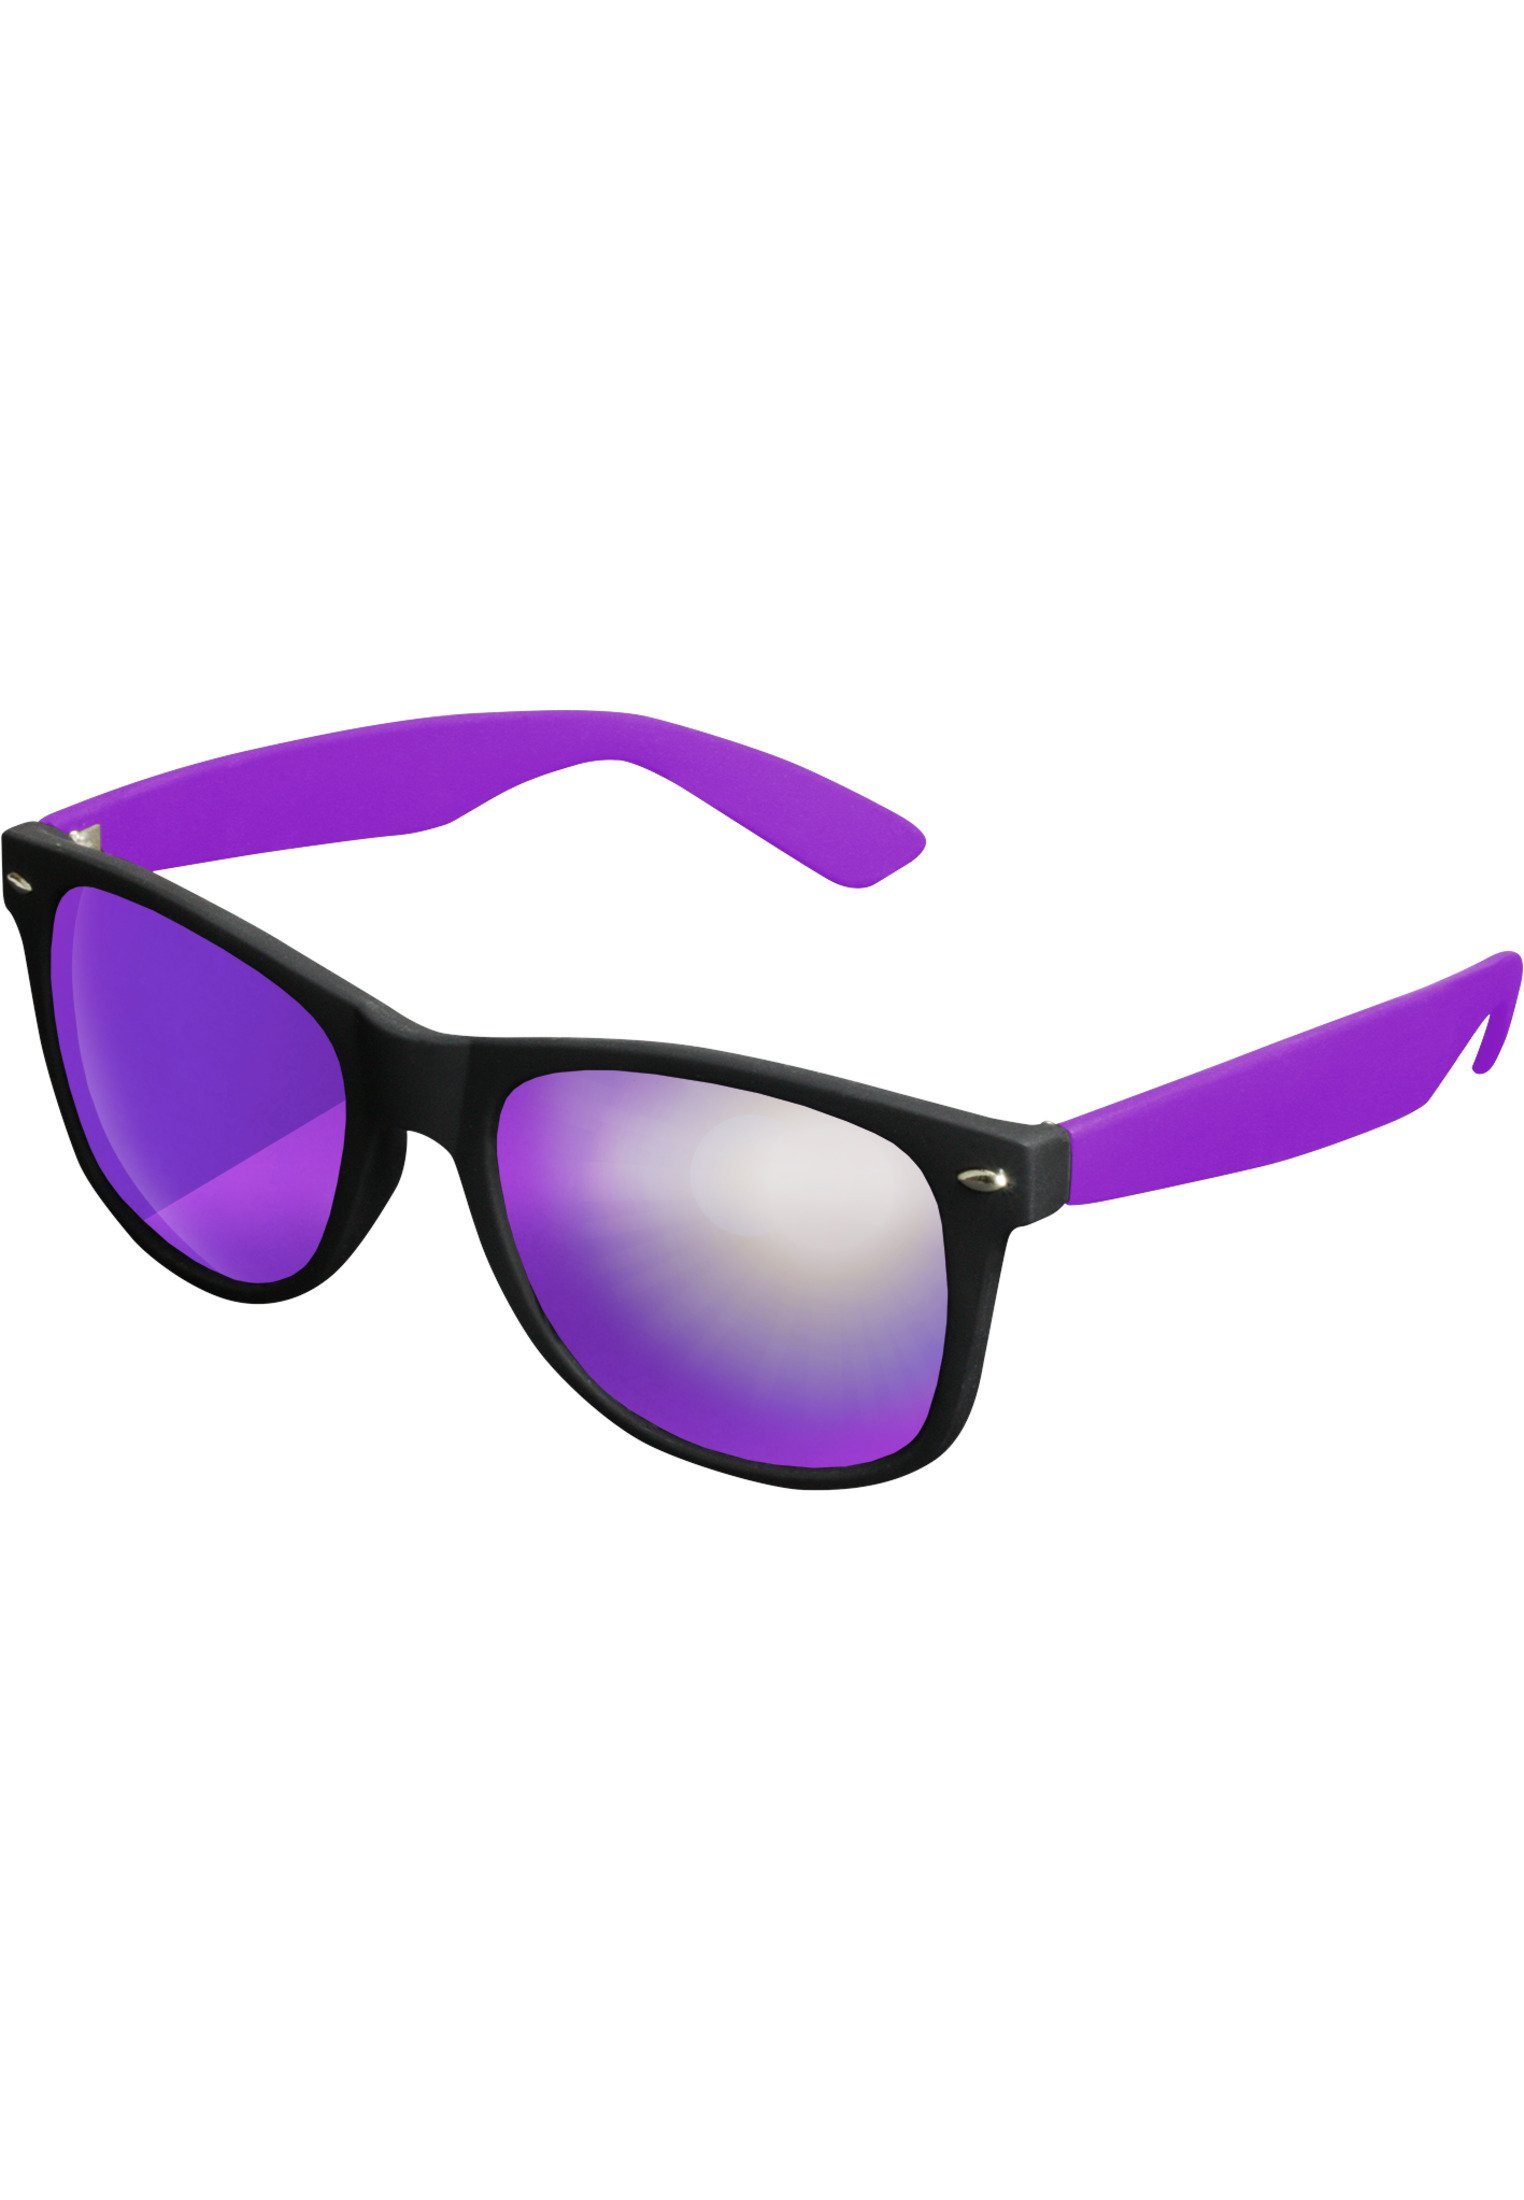 Sunglasses Sonnenbrille Likoma blk/pur/pur MSTRDS Accessoires Mirror